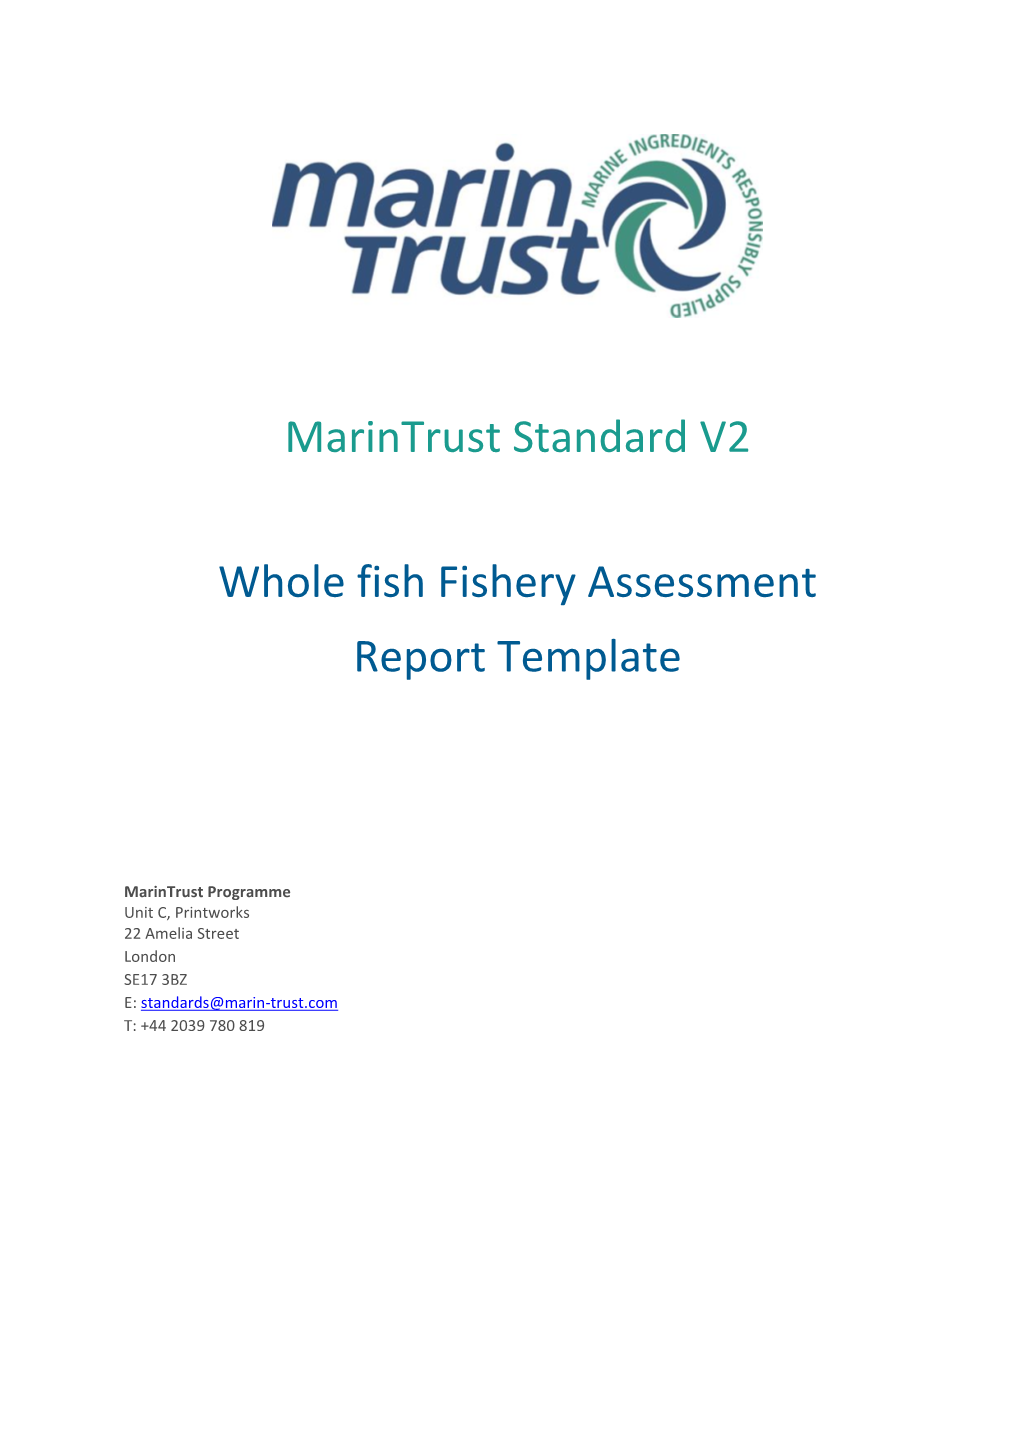 Marintrust Standard V2 Whole Fish Fishery Assessment Report Template